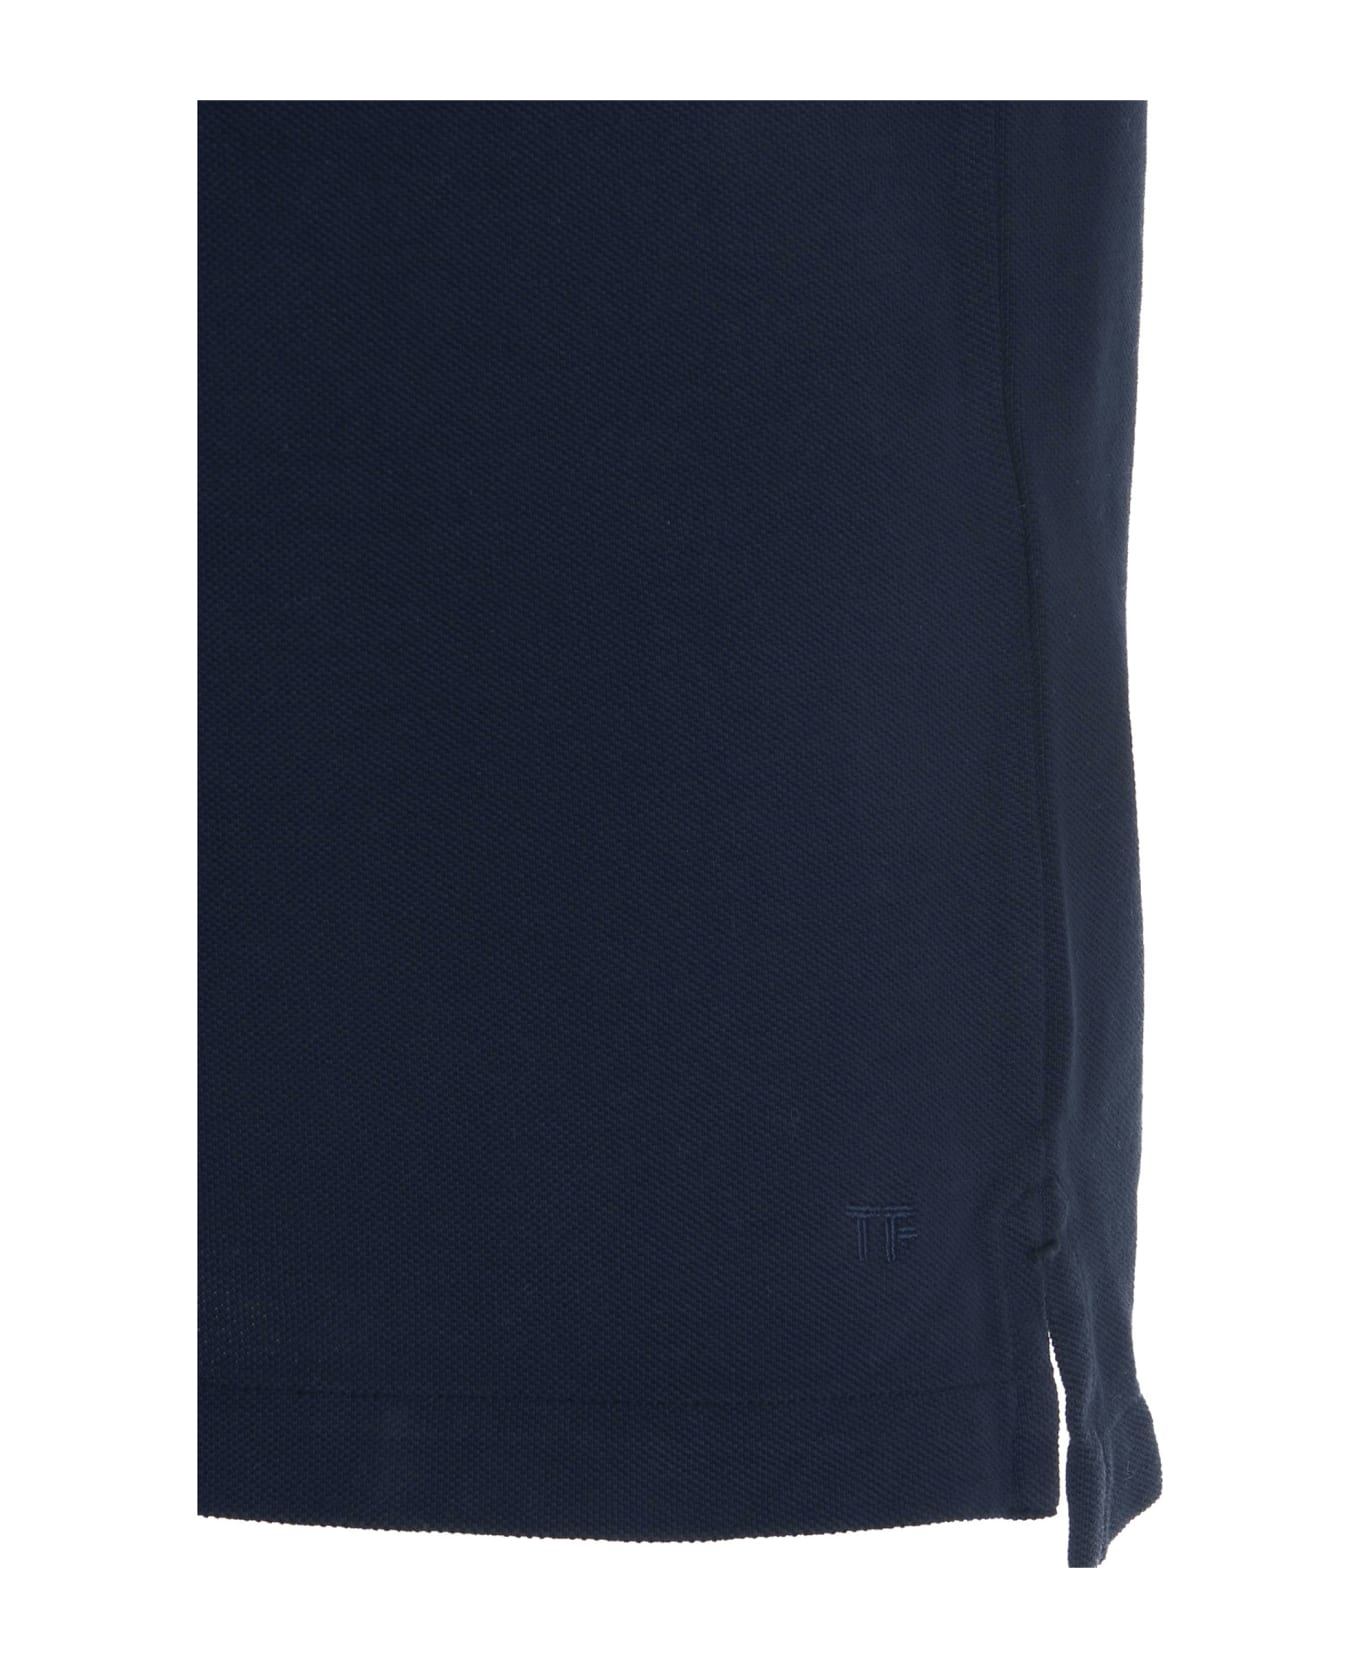 Tom Ford Piqué Cotton Polo Shirt - Blue